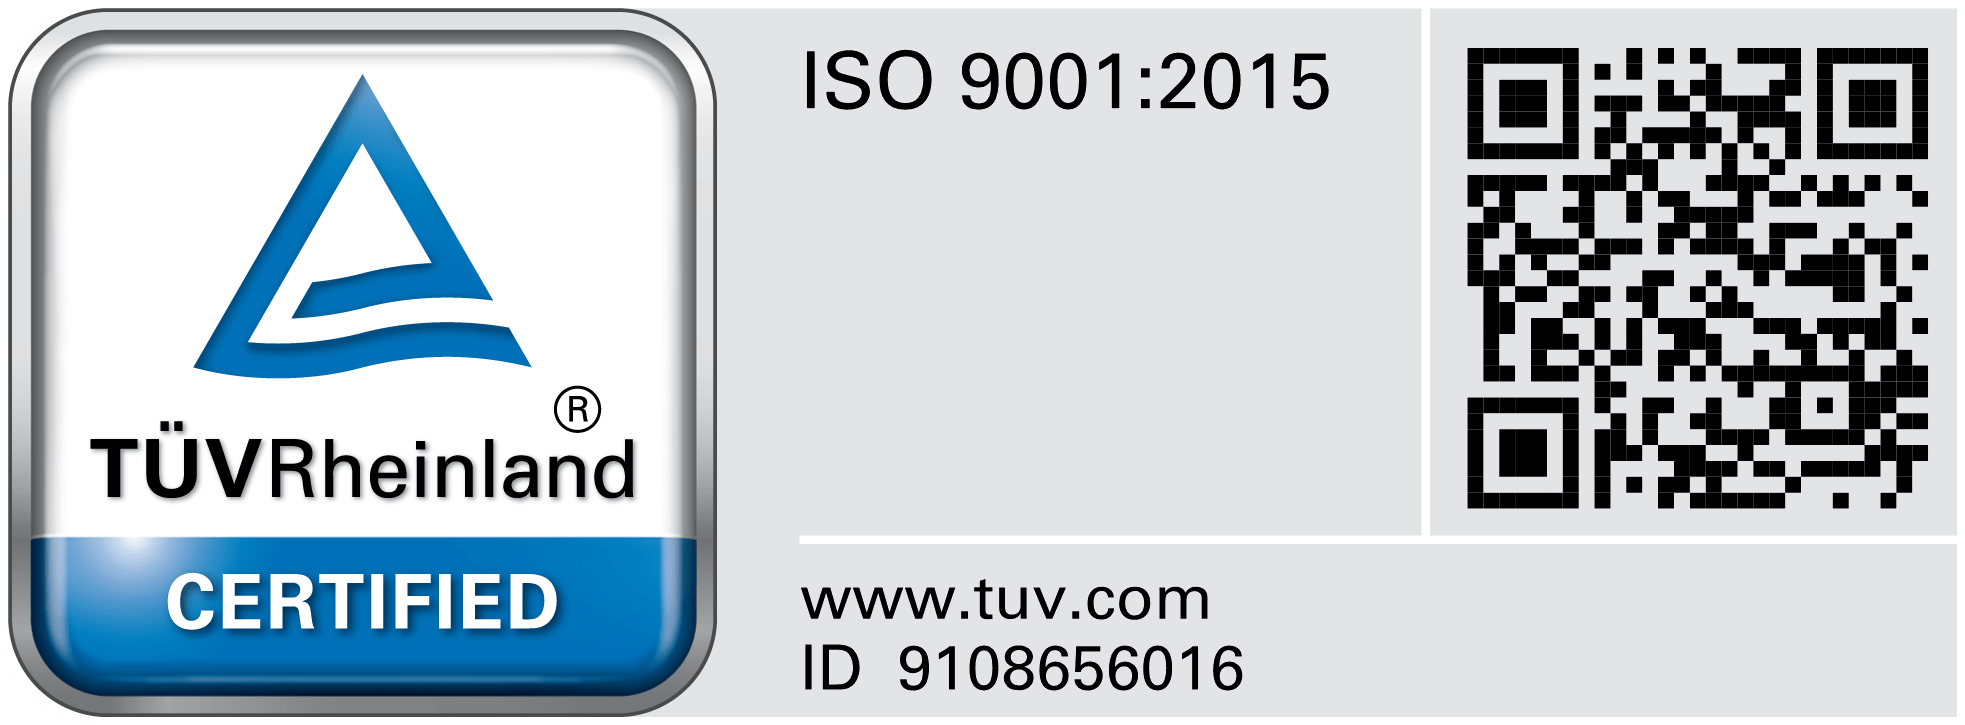 TUV Rheinland certified logo with QR Code